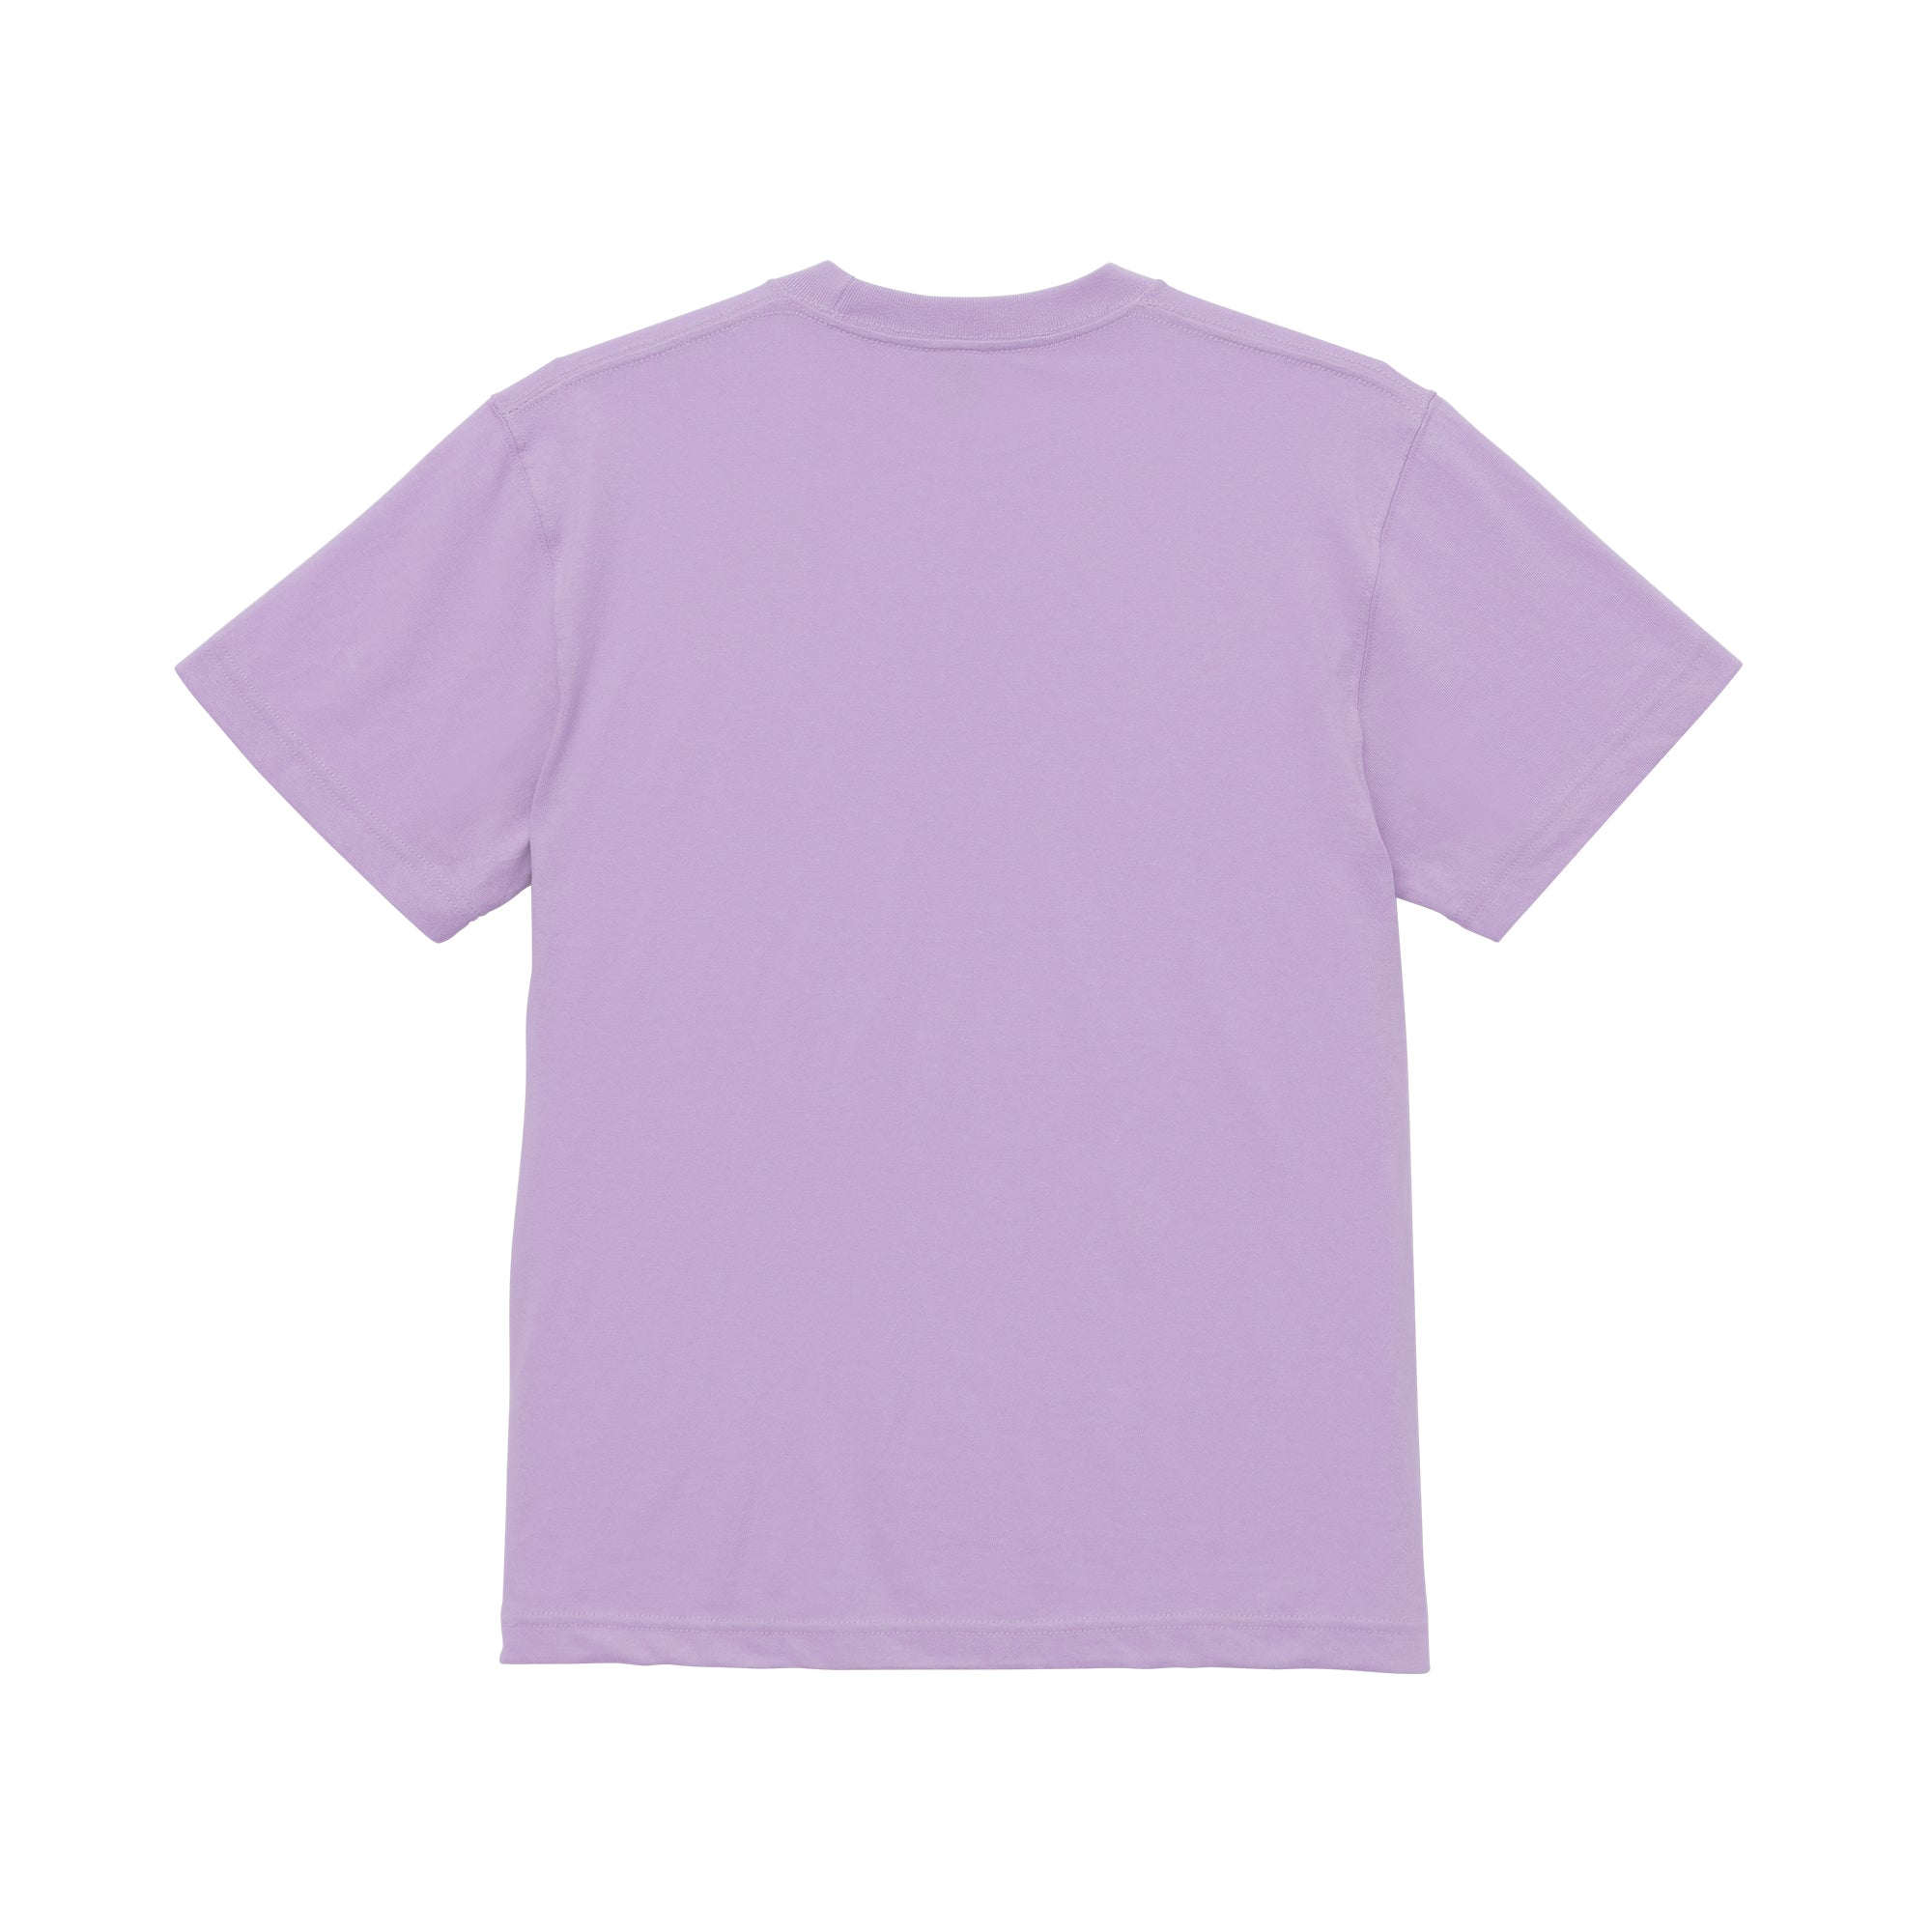 4208 - 6.0 oz Heavyweight T-shirt - Lilac x 2